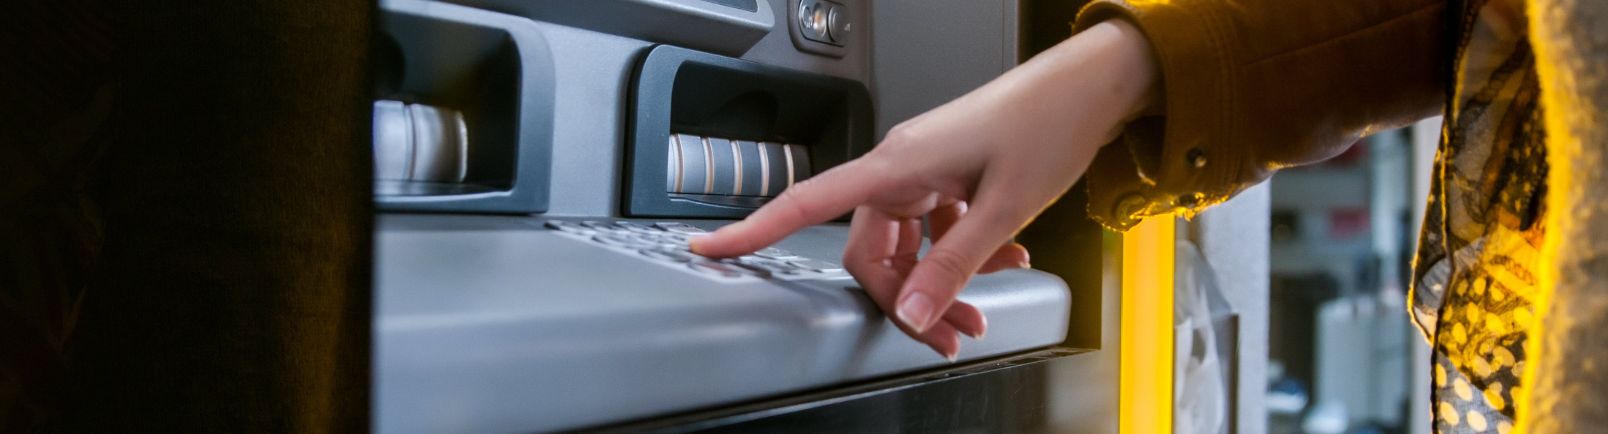 a lady using an ATM machine